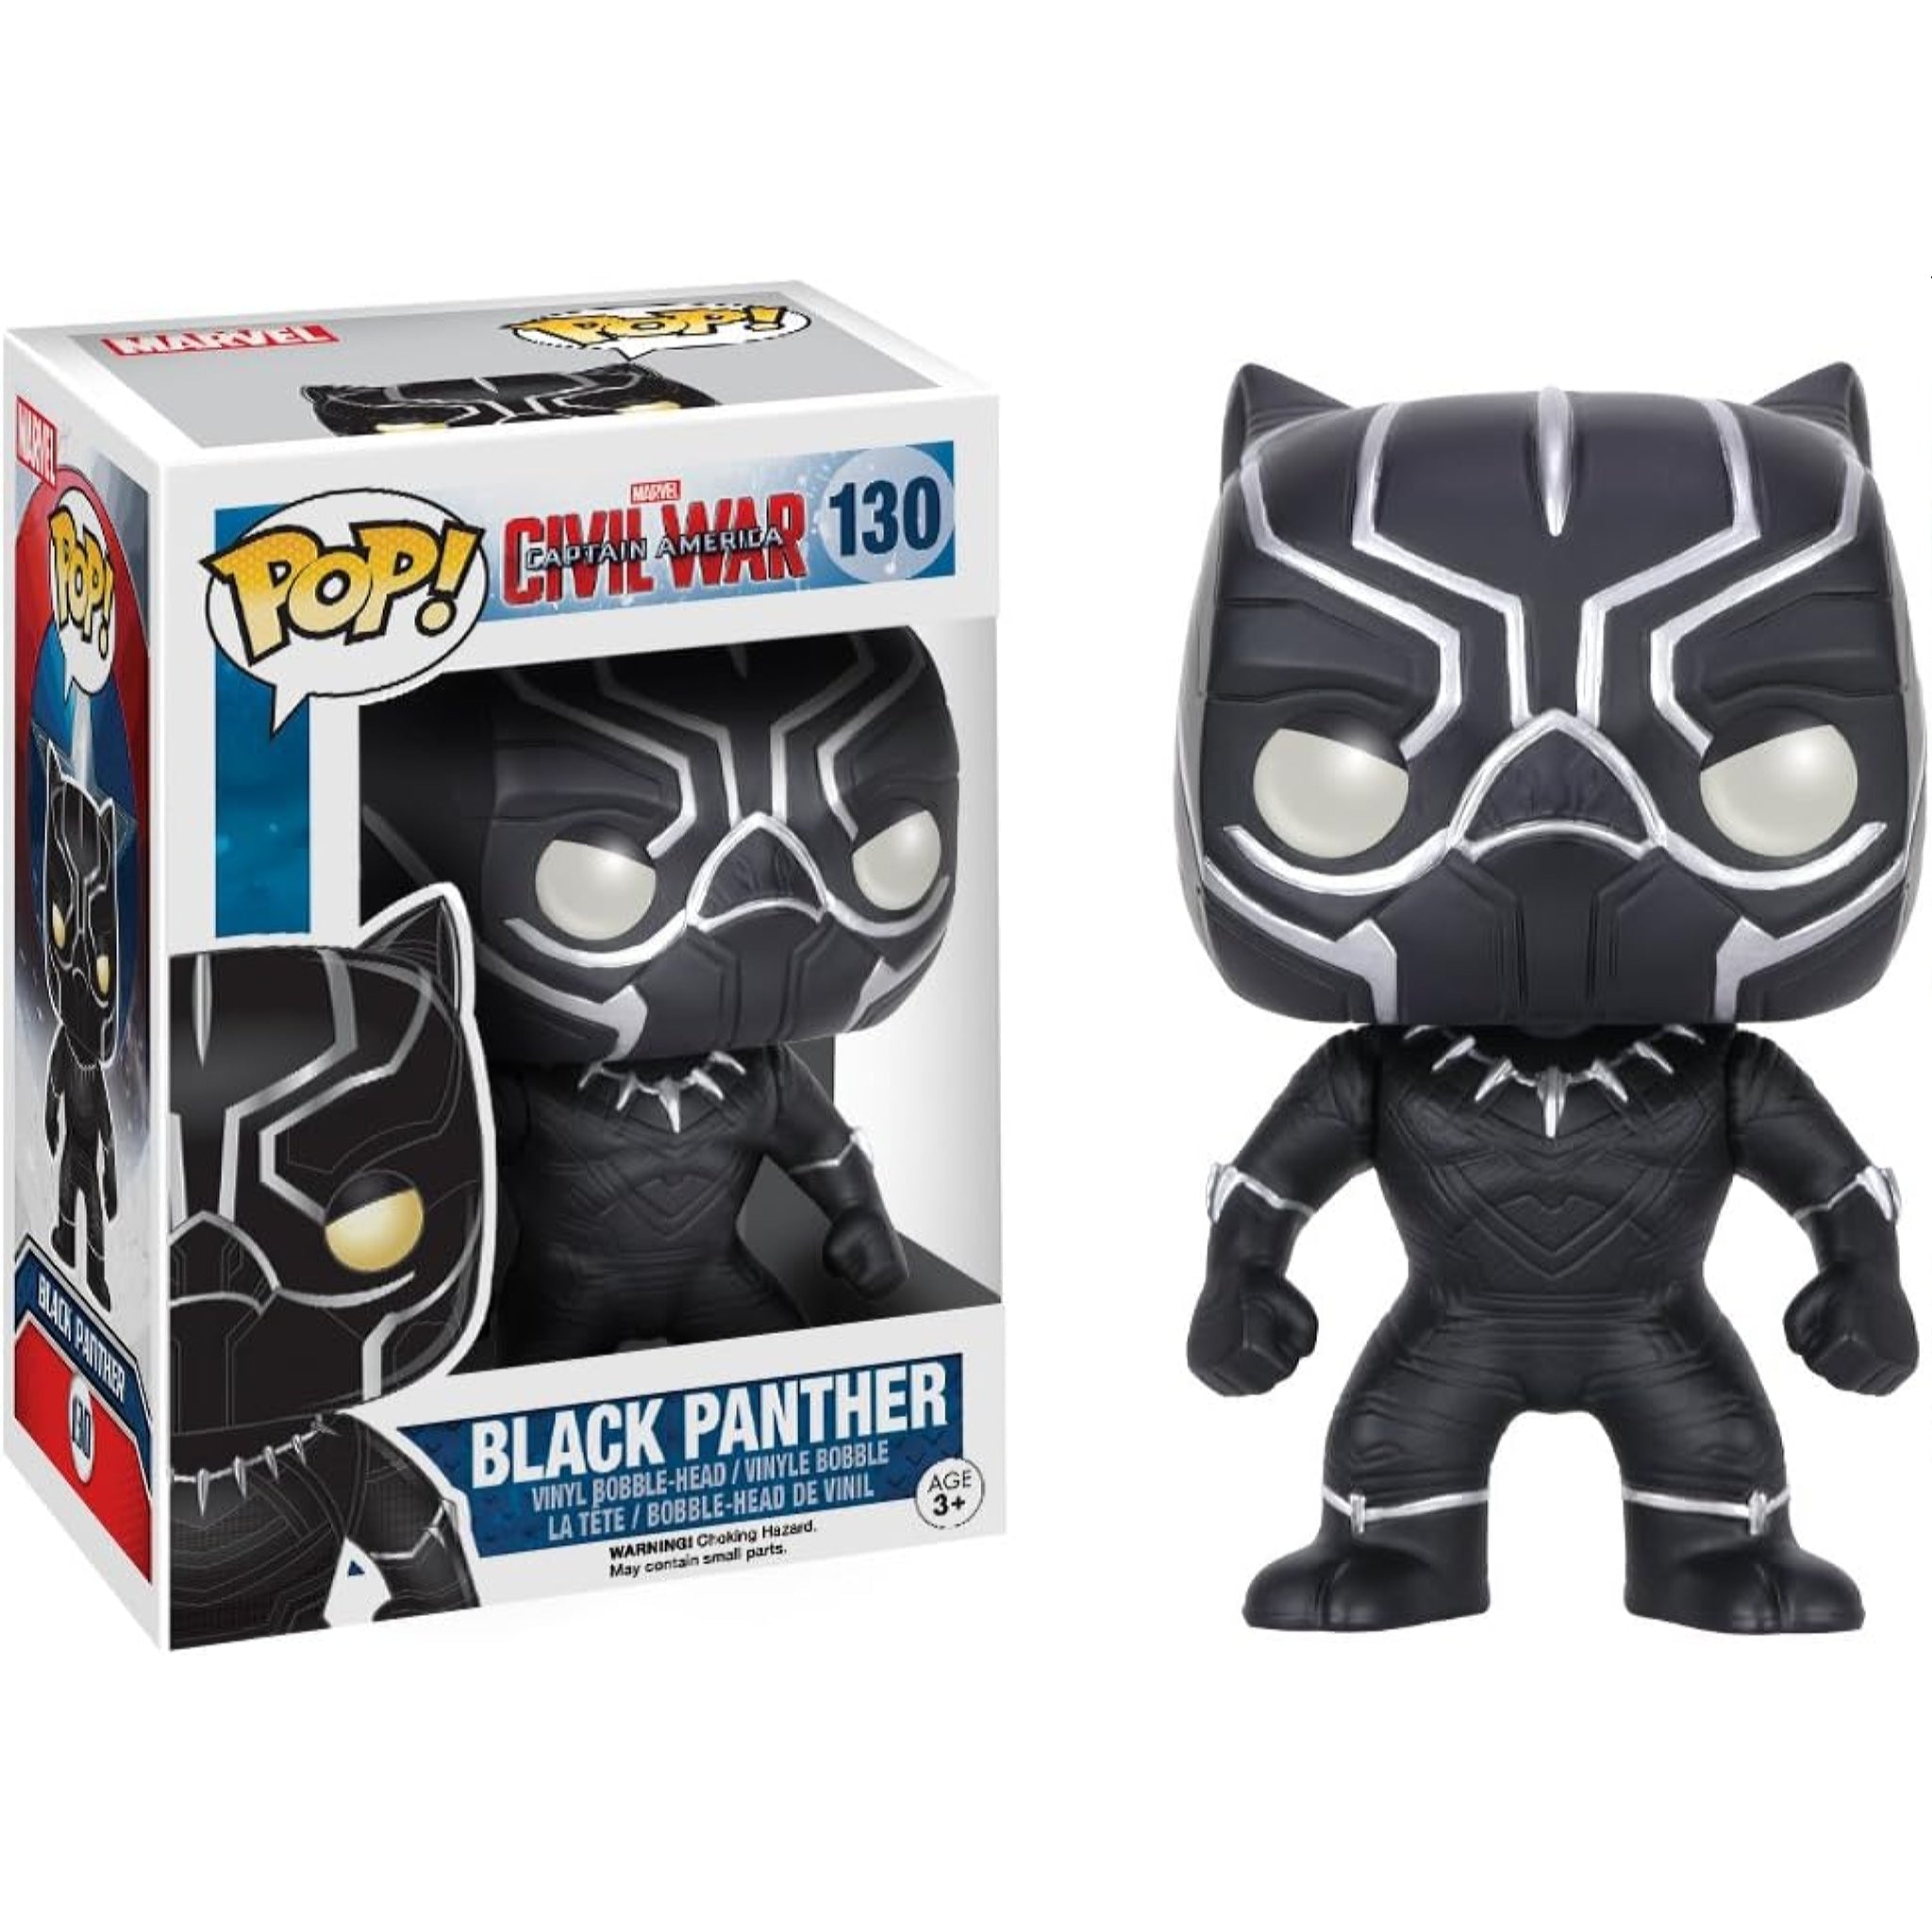 Marvel Captain America Civil War Black Panther Funko Pop! Vinyl Figure